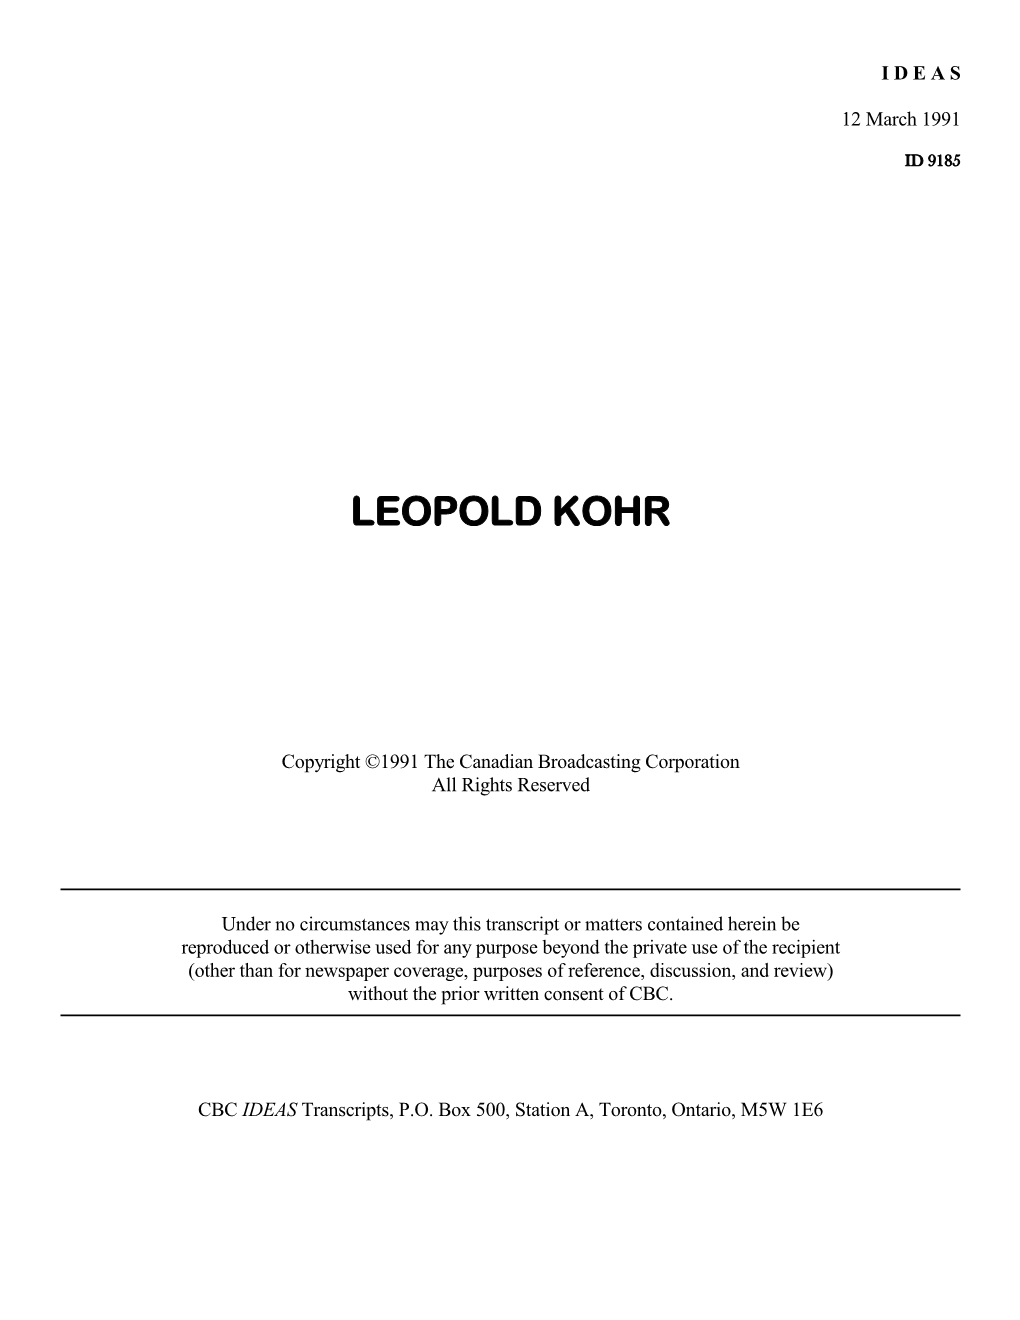 Leopold Kohr